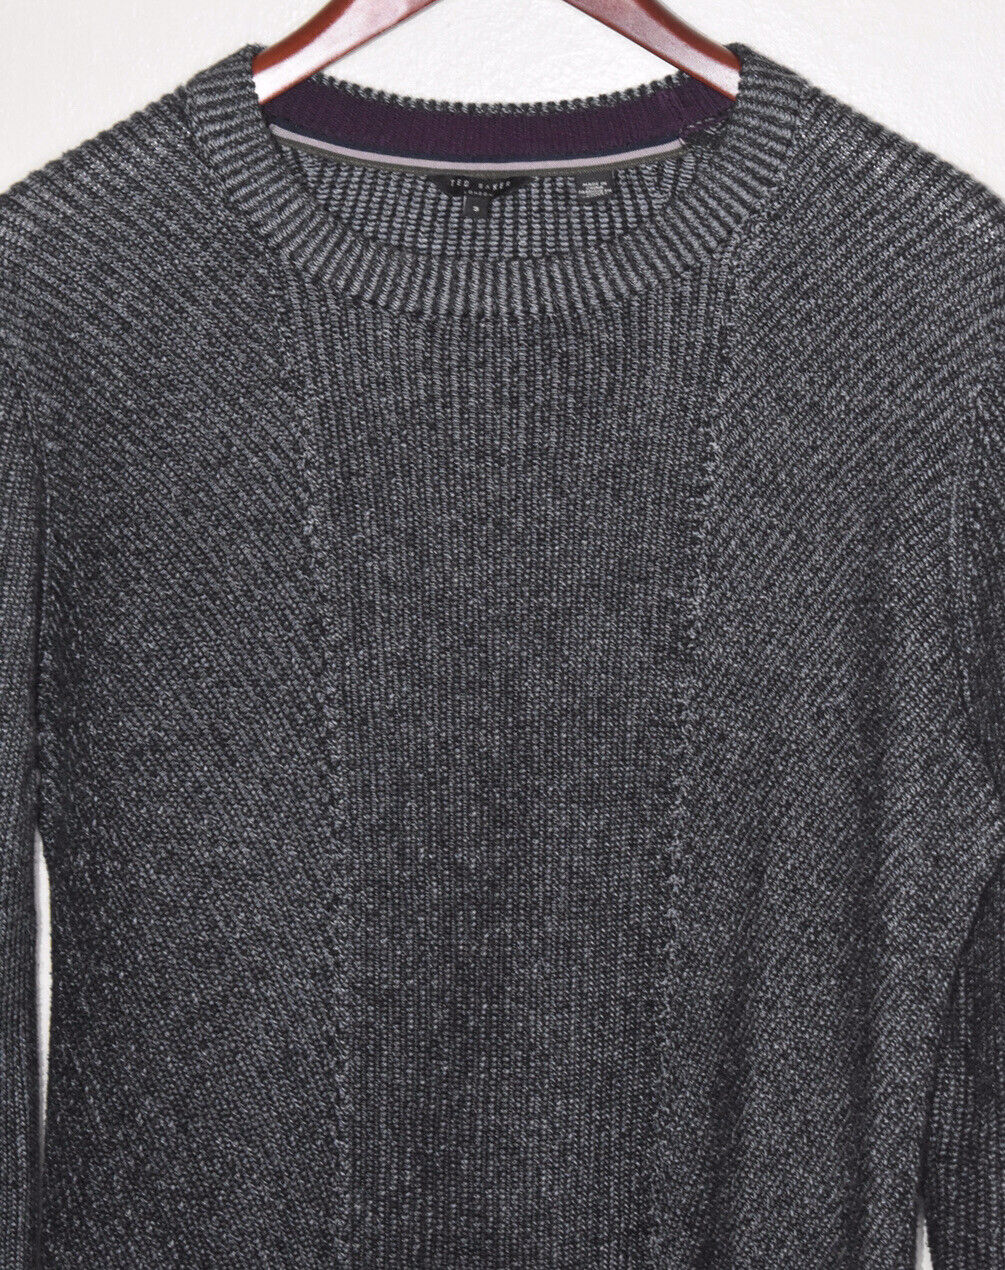 Ted Baker Men's Sweater Size 3/M Cotton Blend - image 3